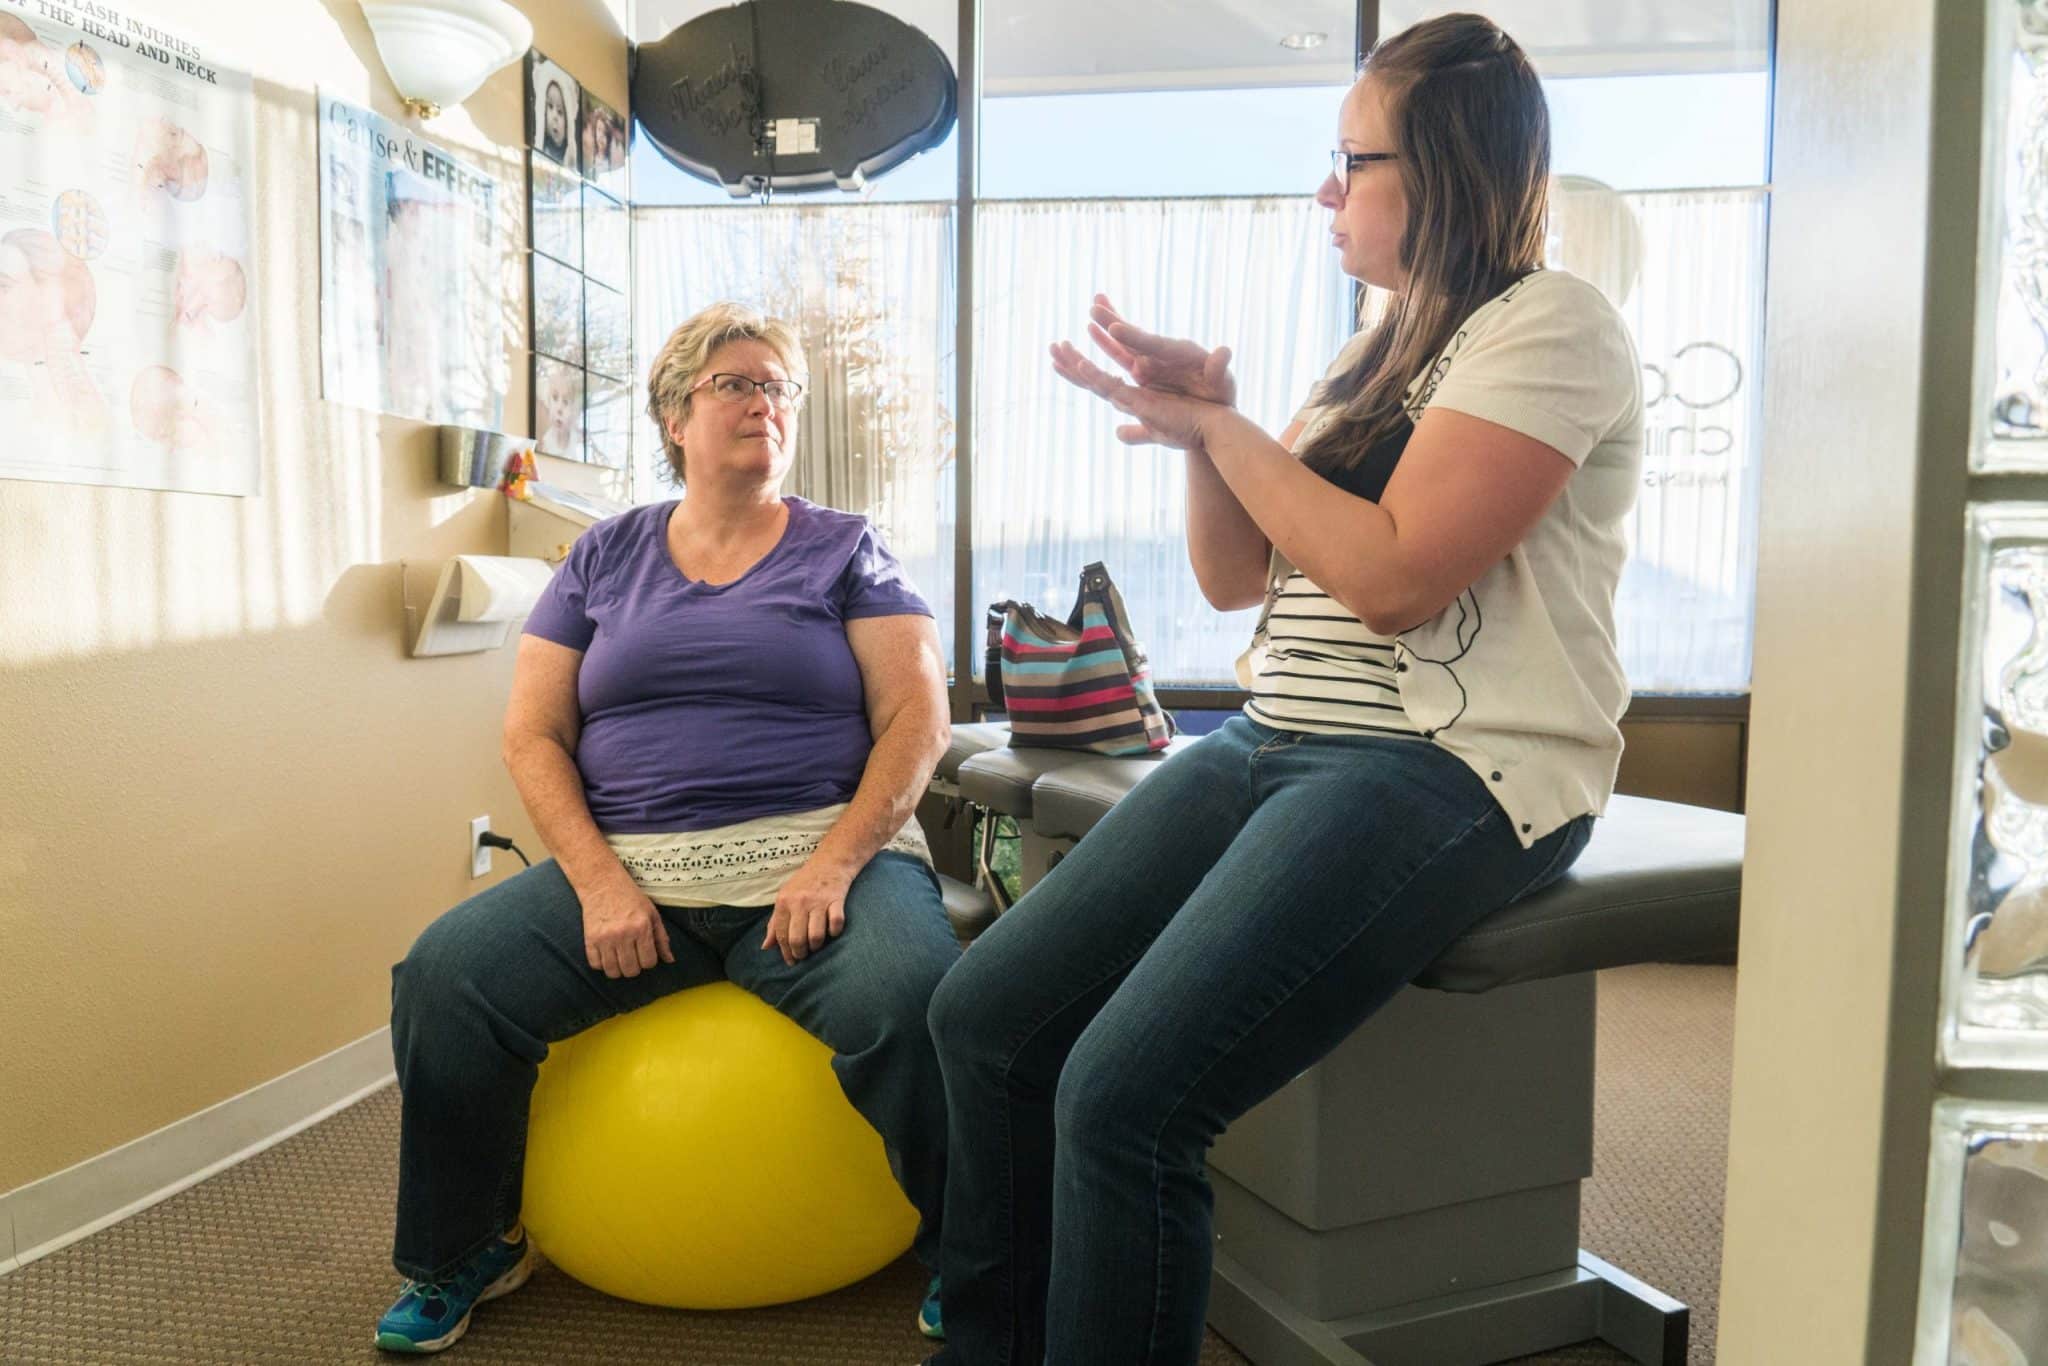 A practicioner guiding a female patient through exercises on an exercise ball